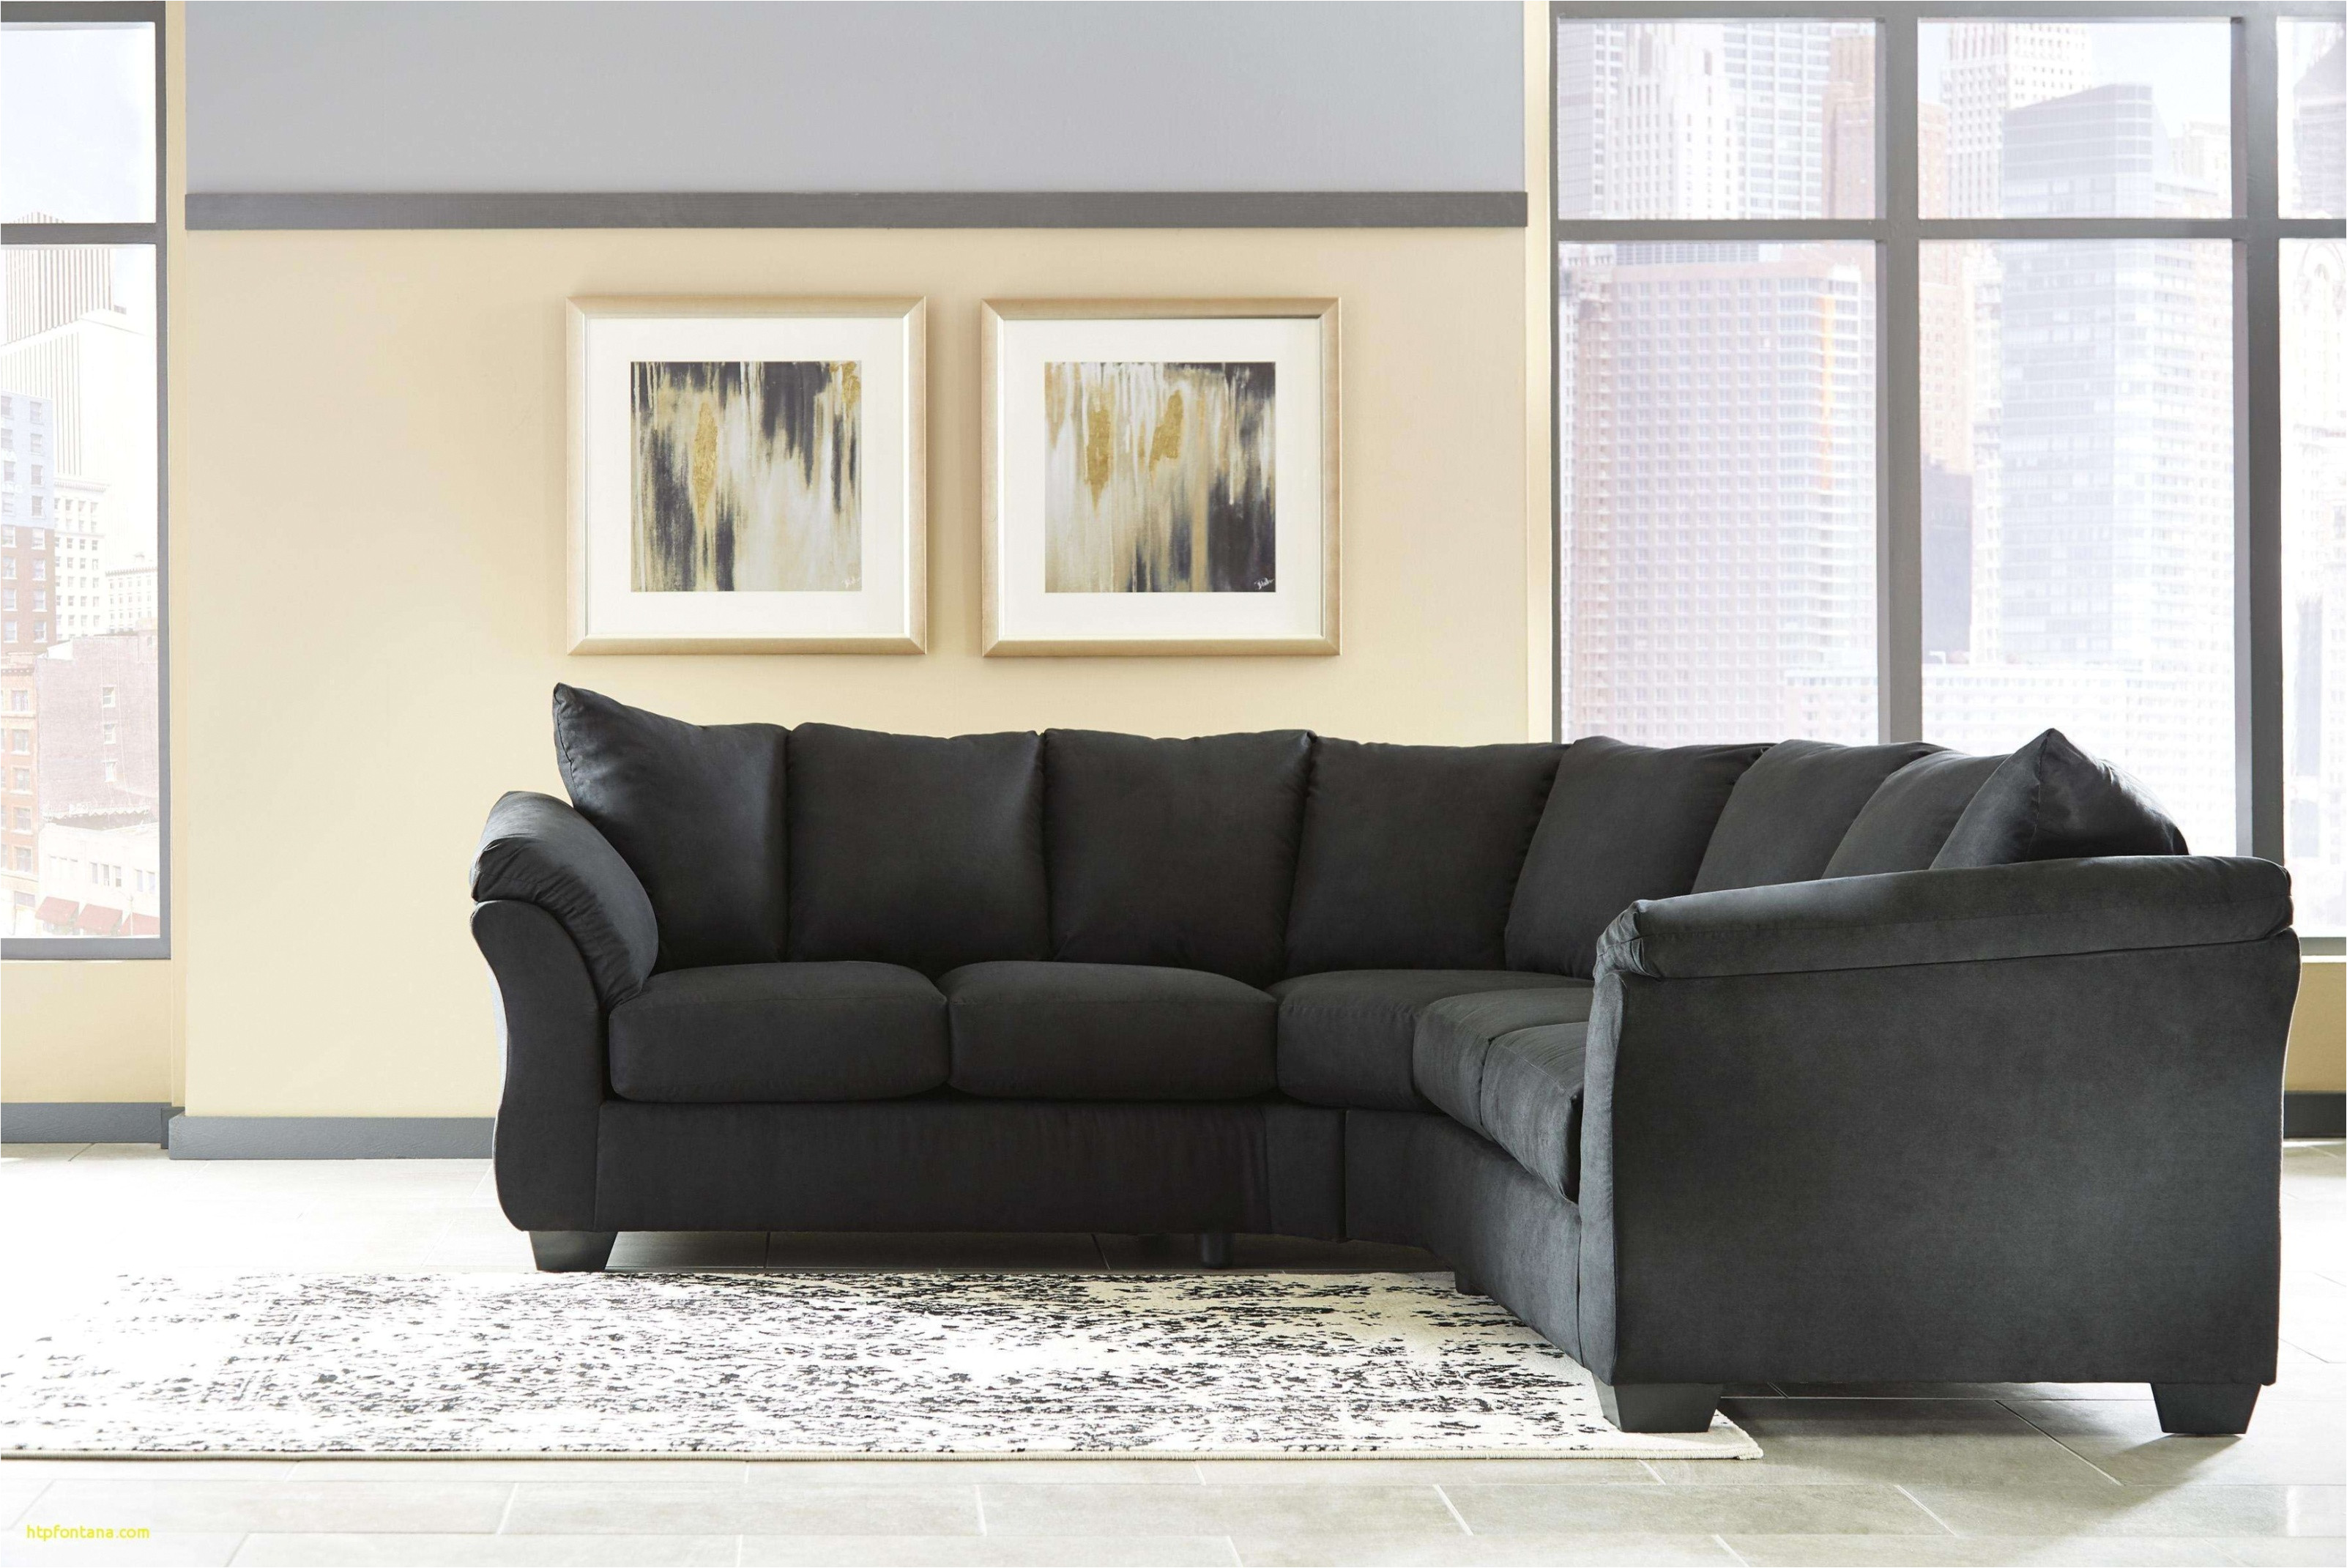 image de couch and sofa luxury kinderzimmer couch mit einzigartig sofa de 0d